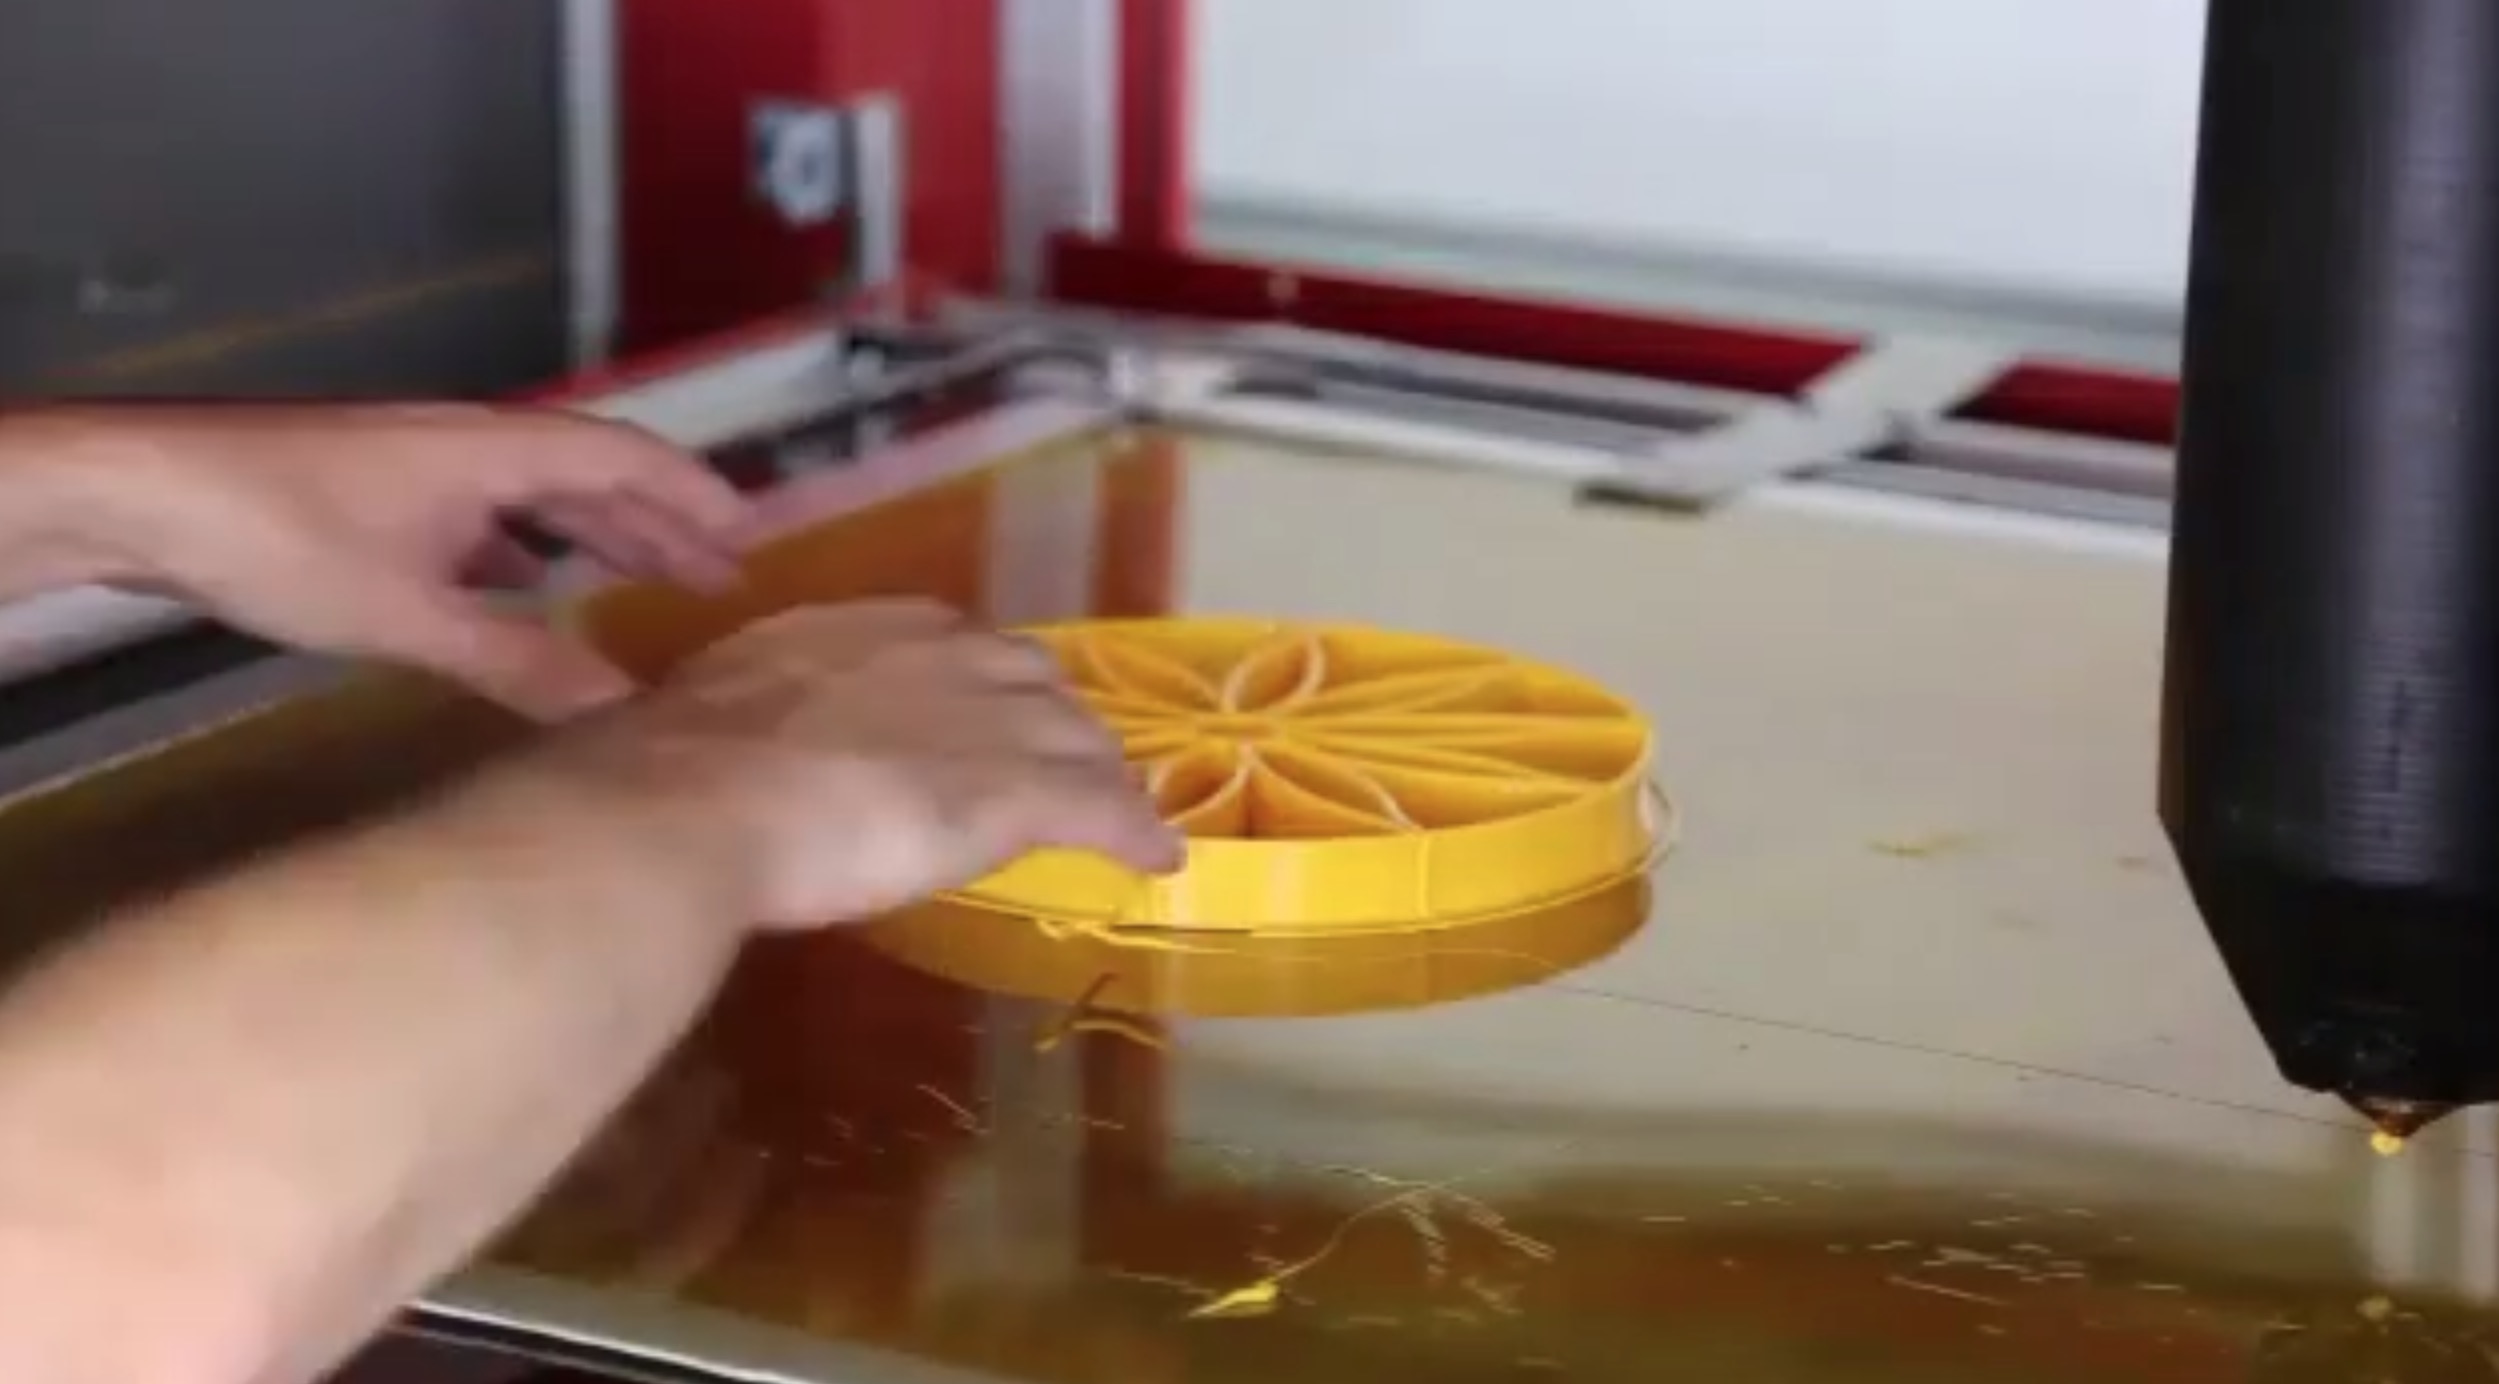  A brief glimpse at Fleximatter's large-scale 3D printer 